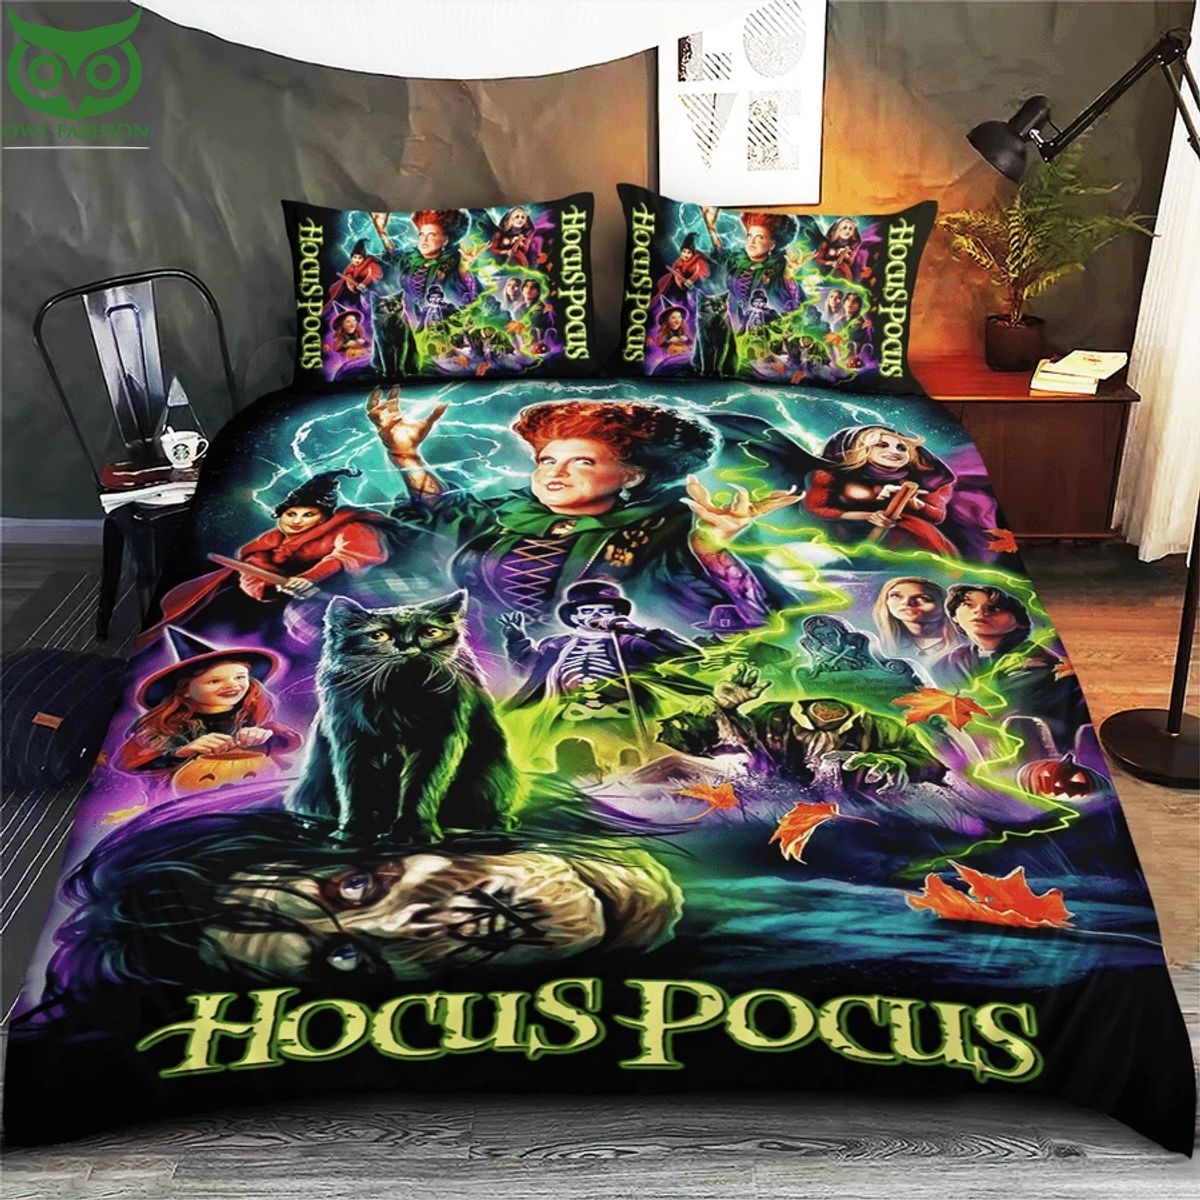 Halloween Resger Hocus Pocus Bedding Set Awesome Pic guys